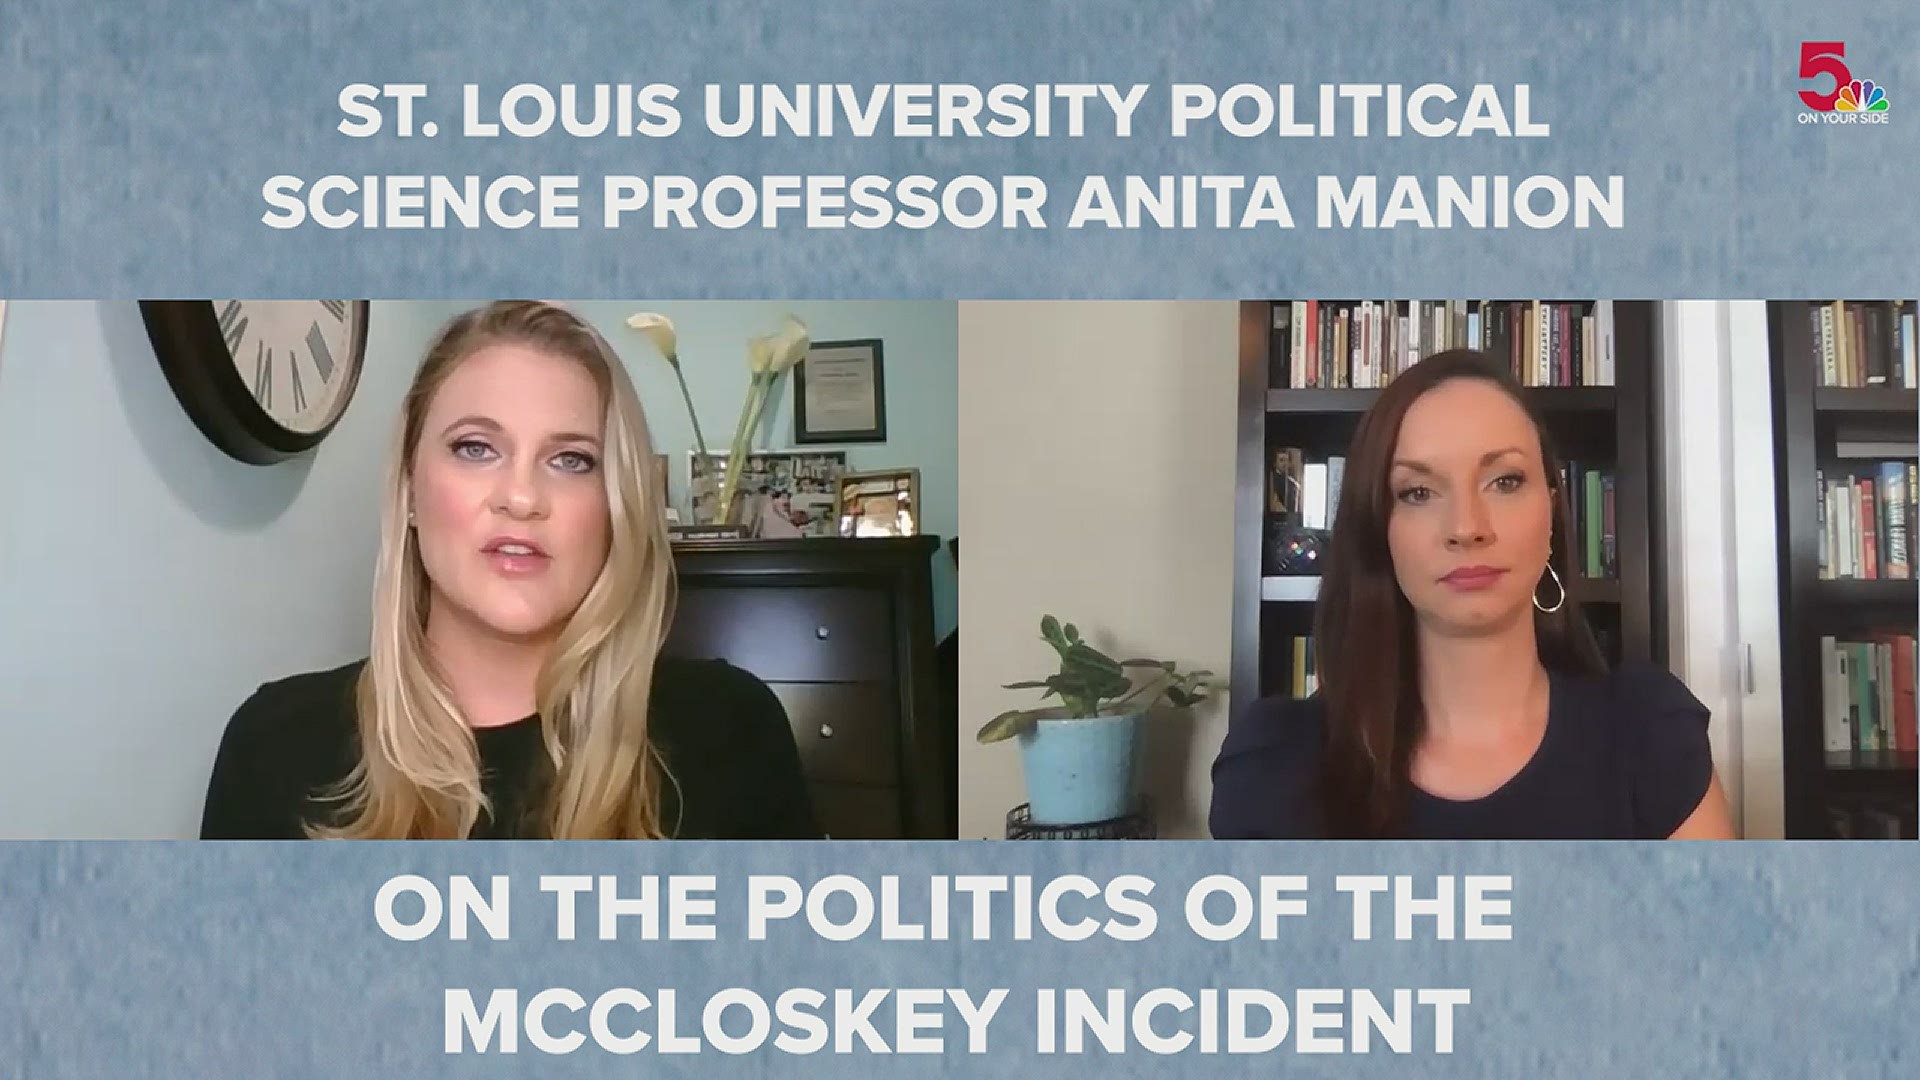 SLU Political Science Professor Anita Manion breaks down the political implications of the McCloskey incident.